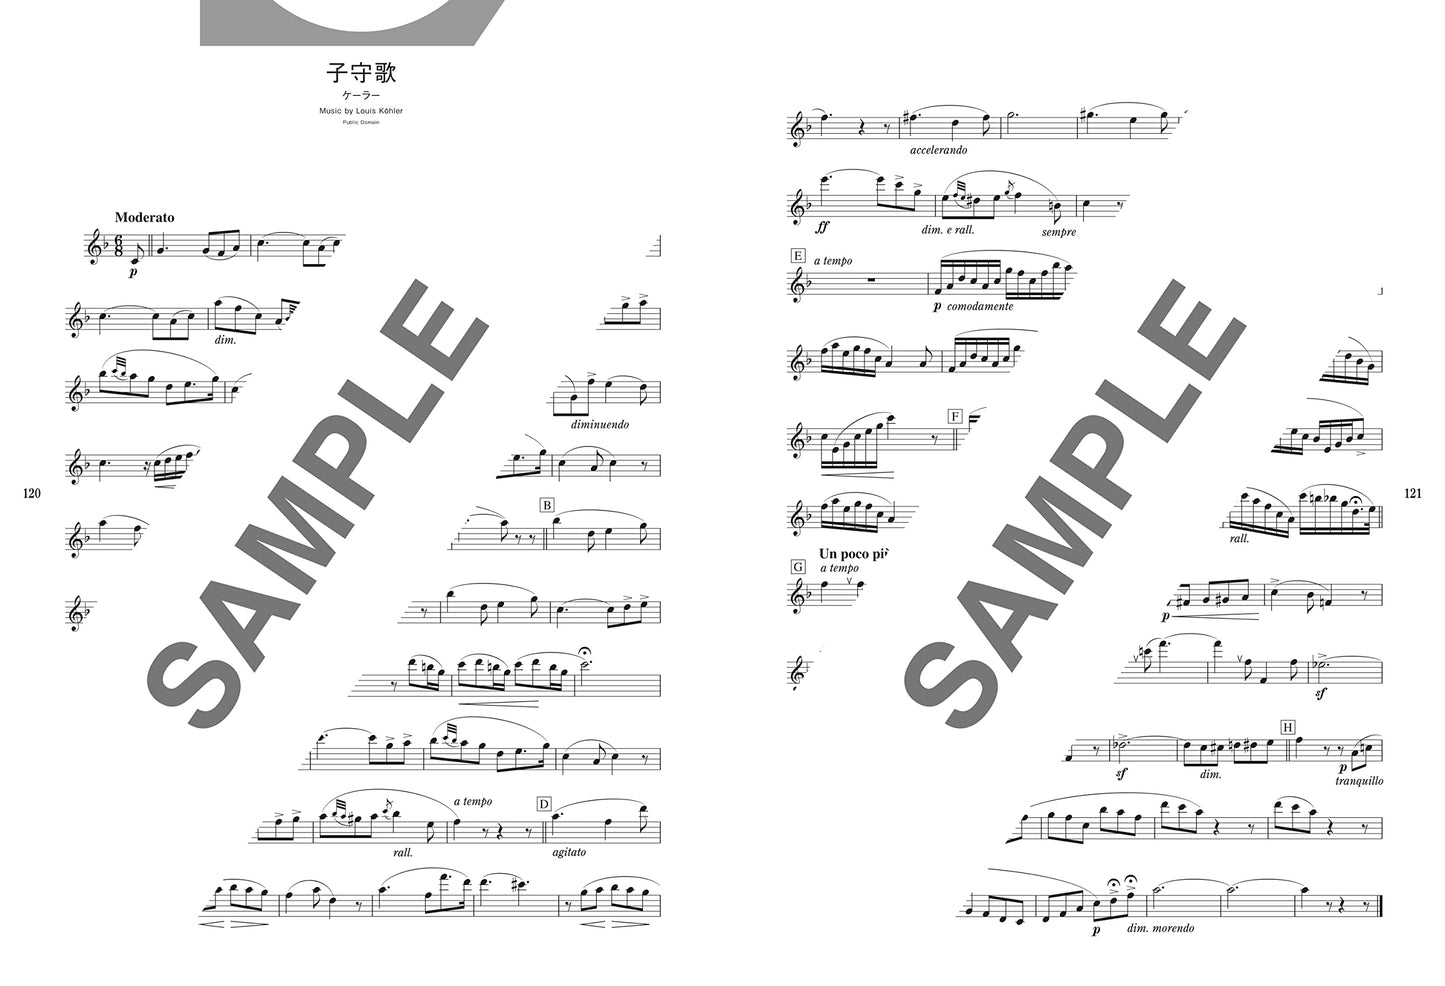 Popular and Standard Repertoire Flute Solo(Upper-Intermediate) Sheet Music Book